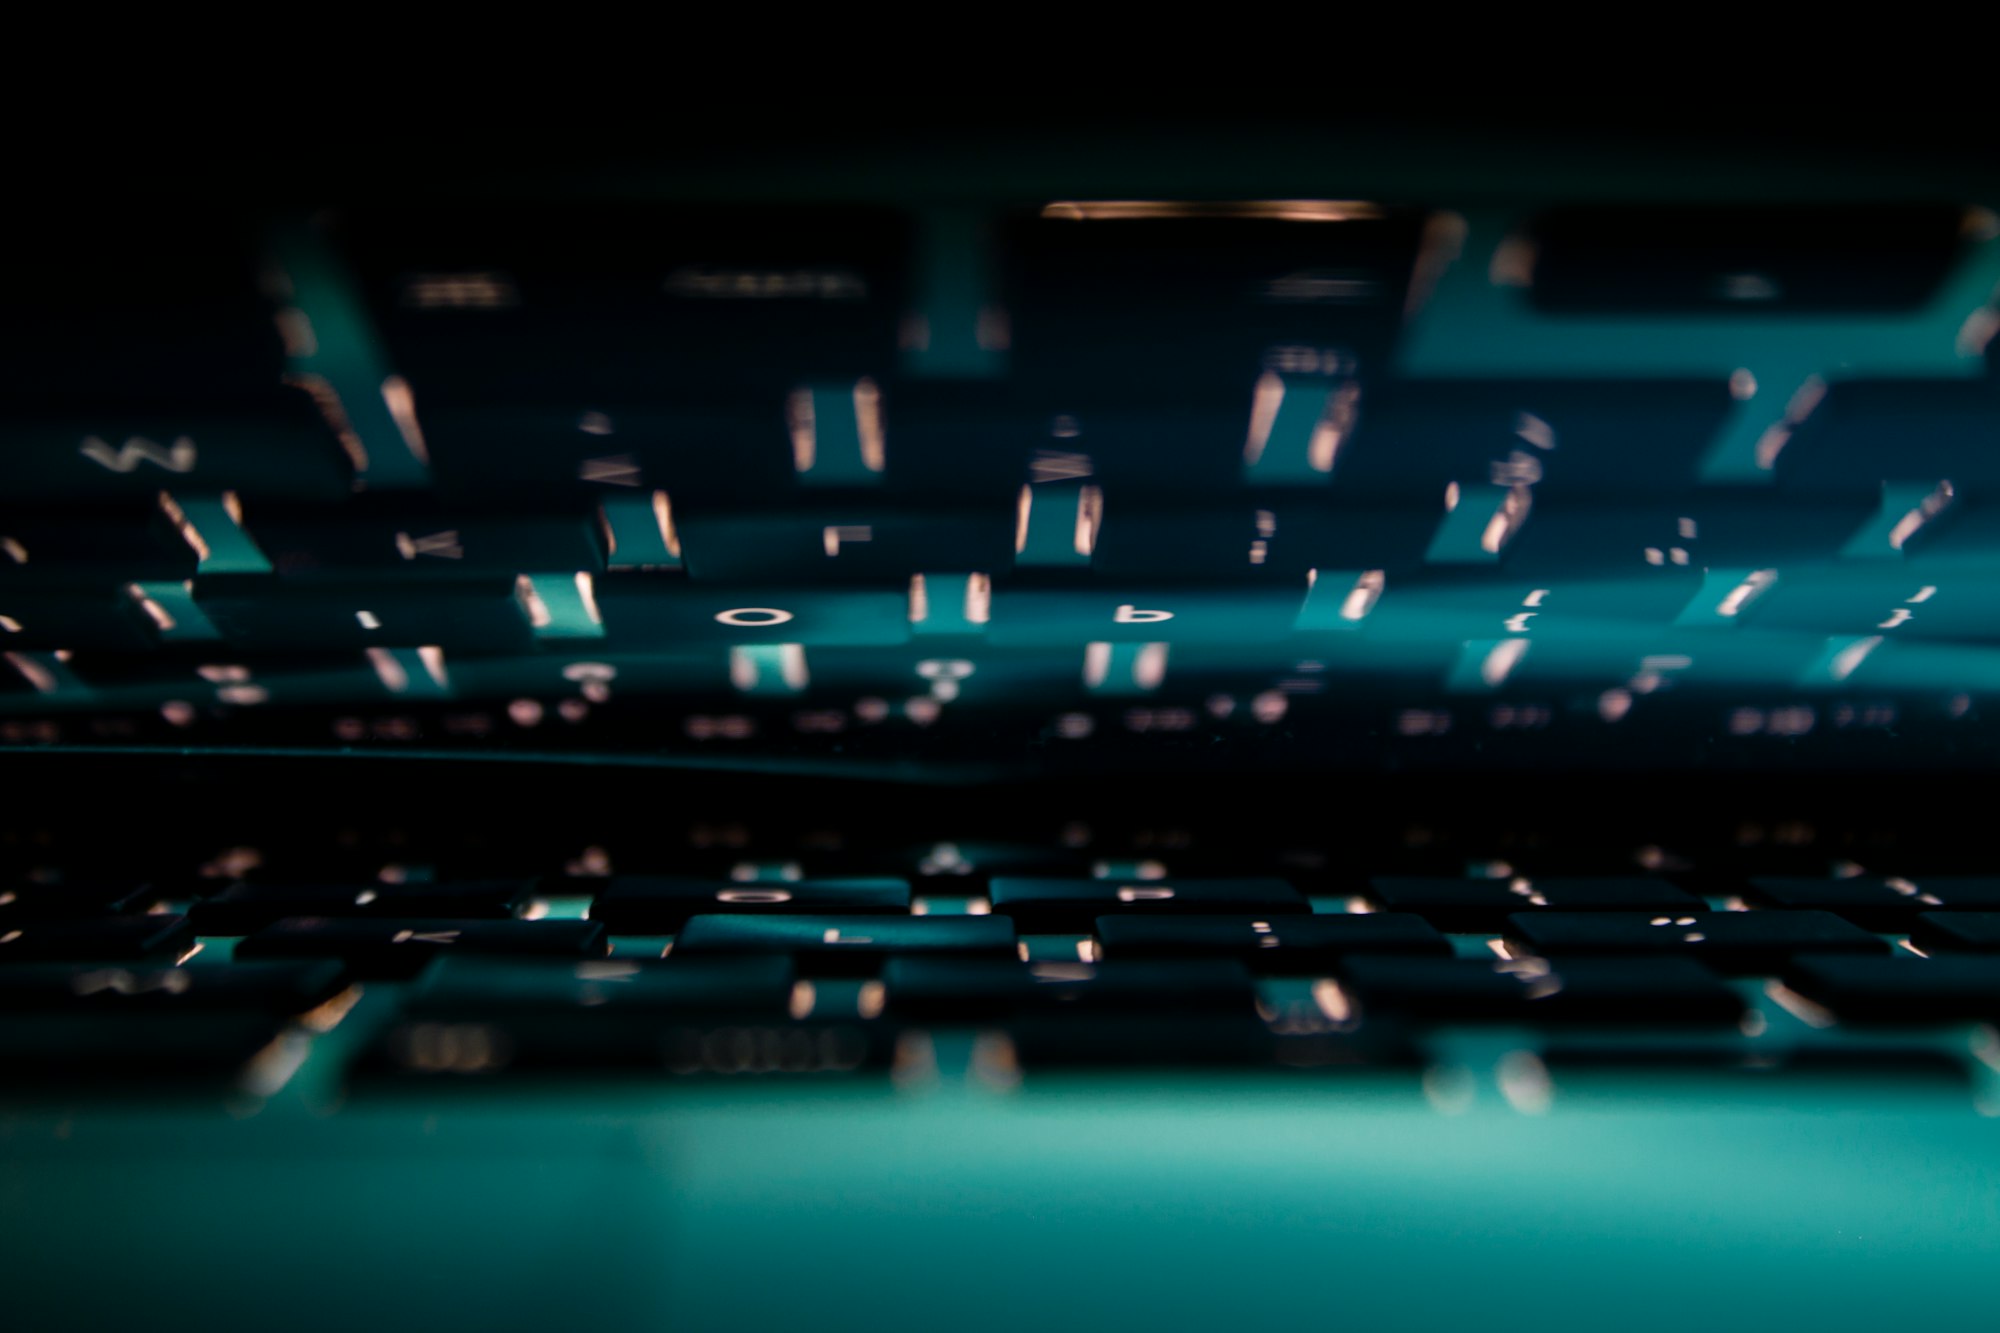 MacBook Pro 2015 reflecting blue cyan light and keyboard keys on the screen.